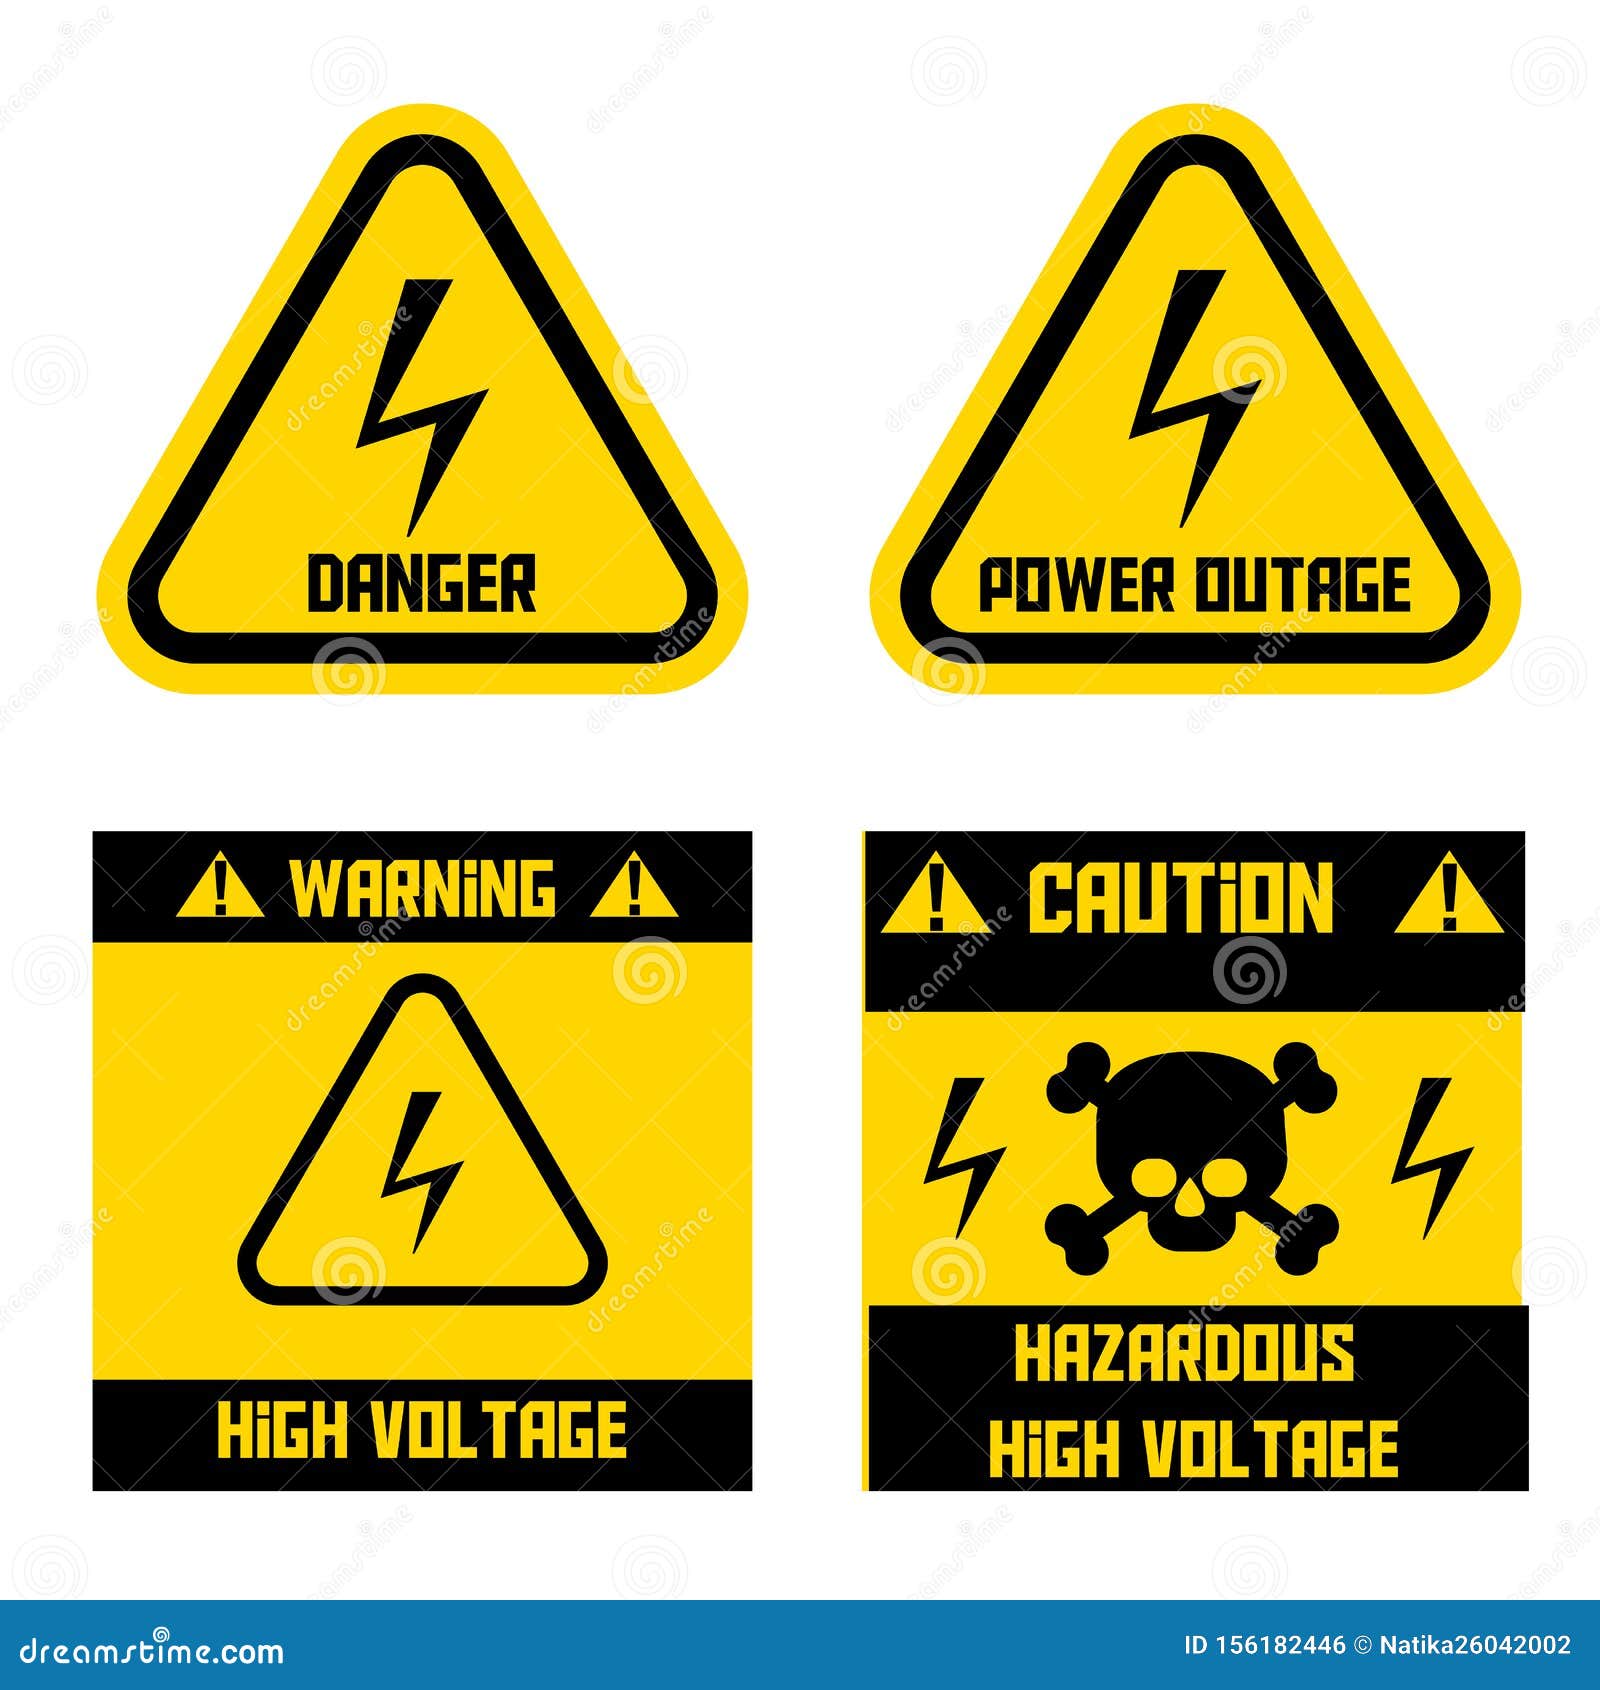 High voltage electrical shock warning hazard symbol sticker safety sign 6 pack 